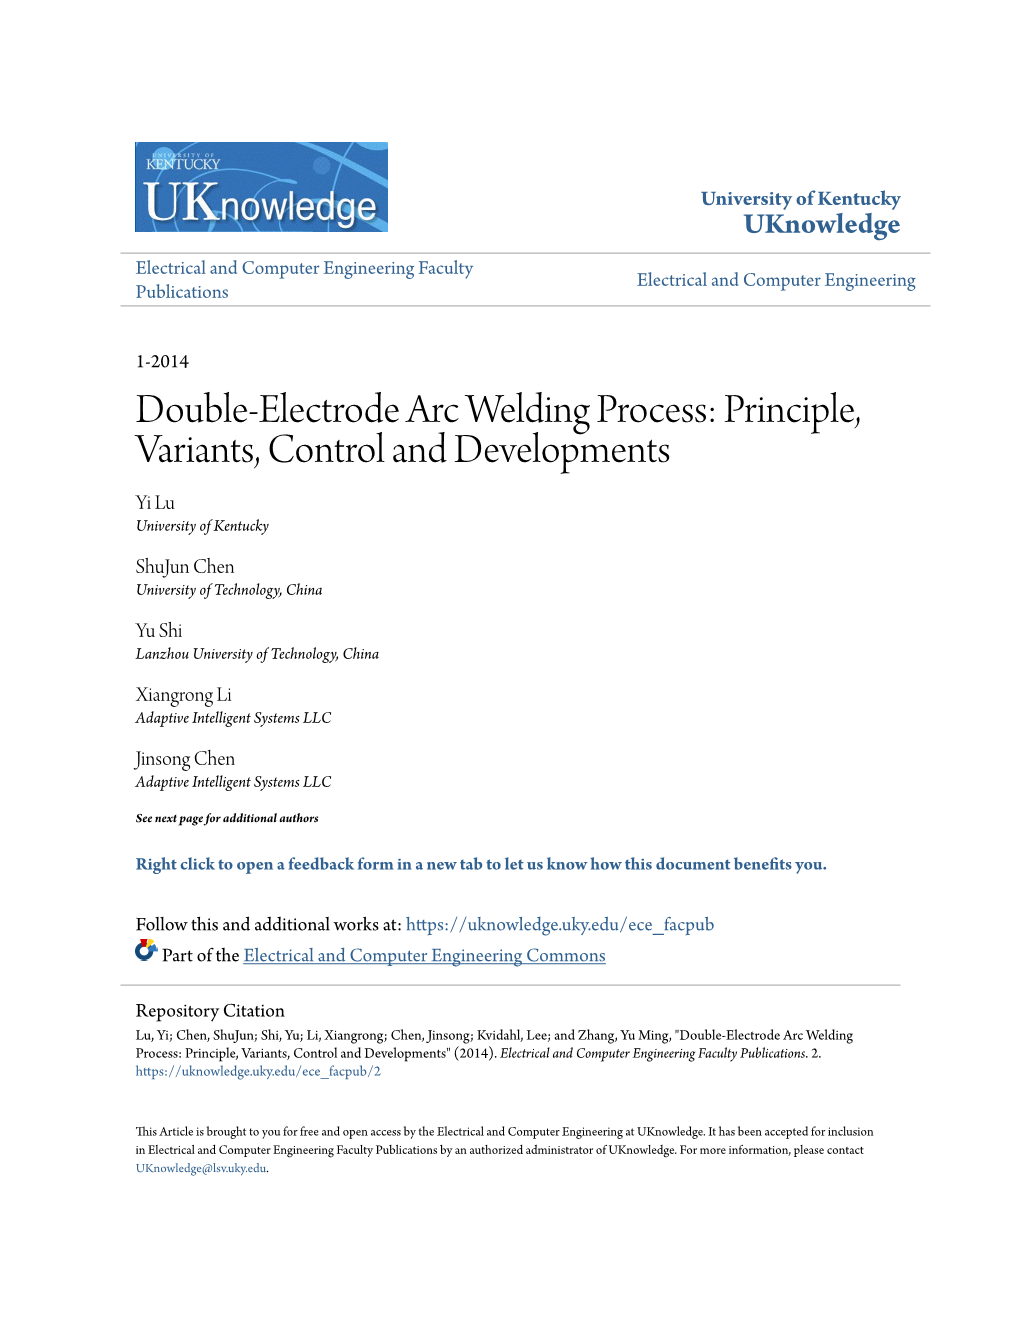 Double-Electrode Arc Welding Process: Principle, Variants, Control and Developments Yi Lu University of Kentucky